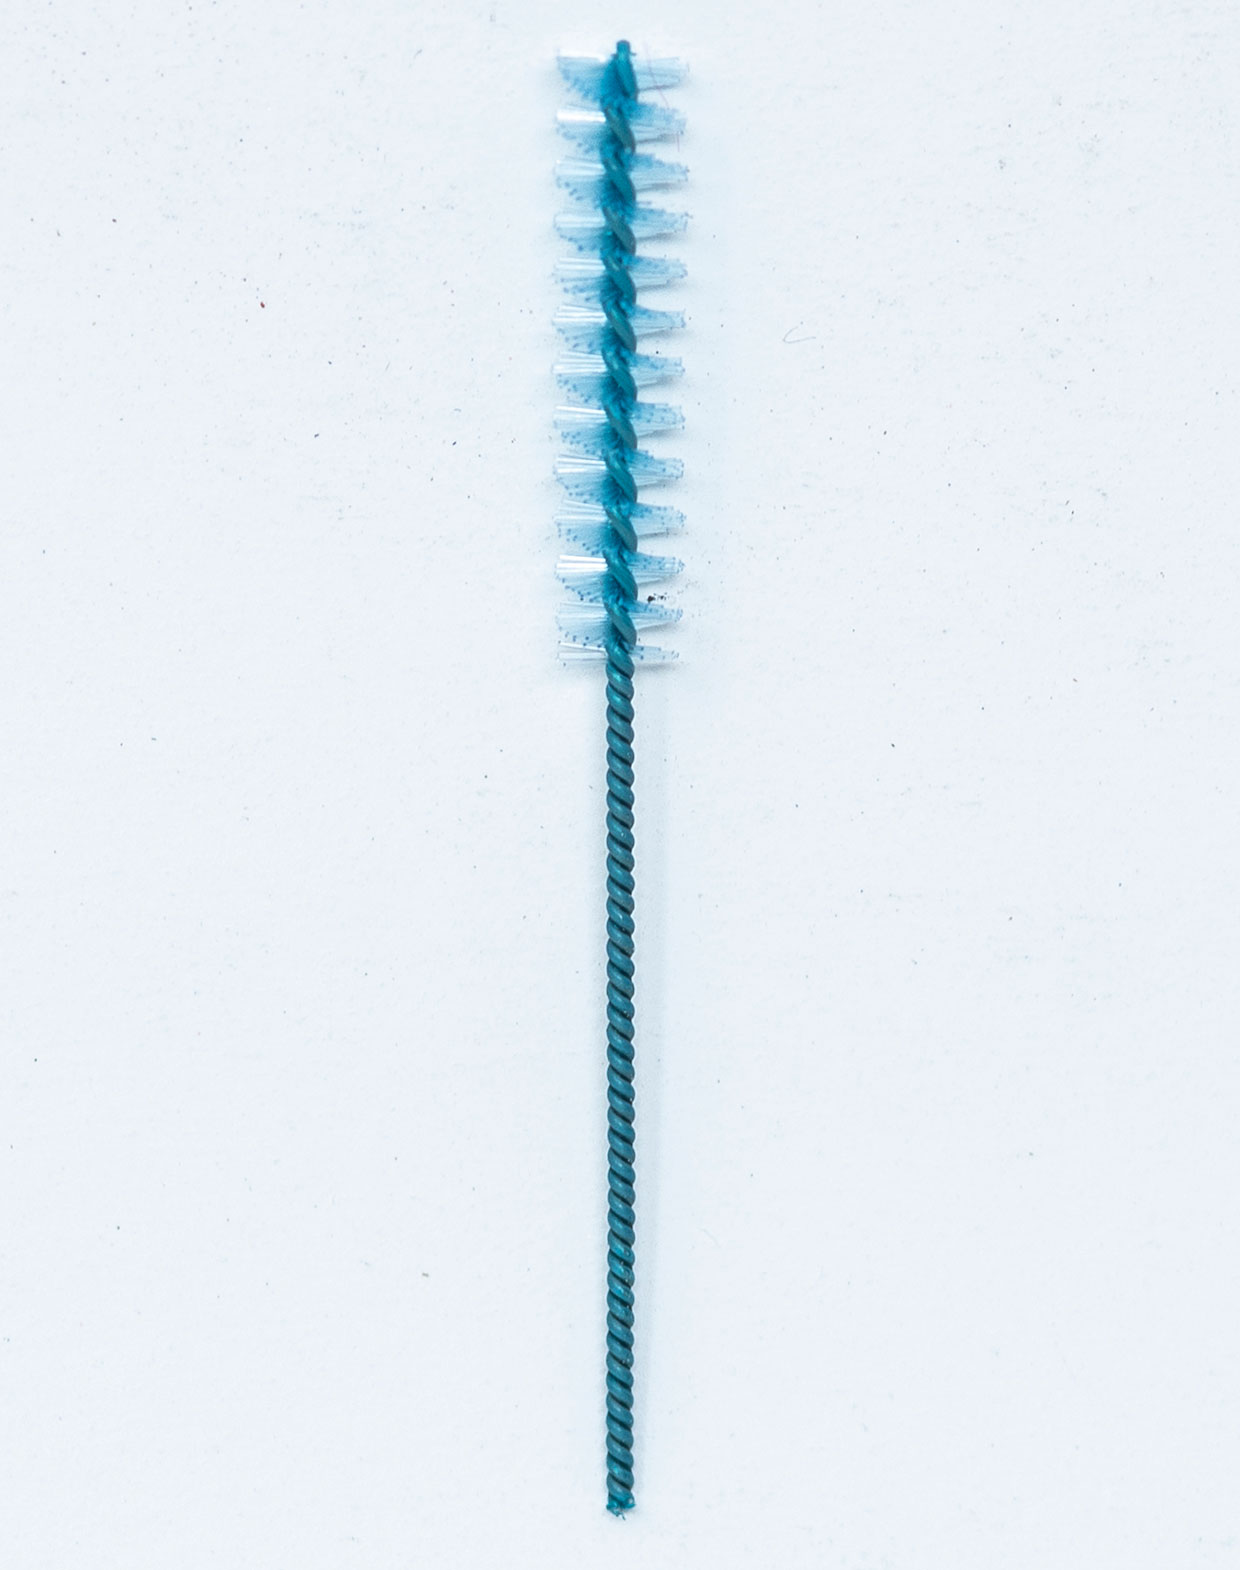 Gum Scovolino Proxabrush Refill ISO 2 – 0,9 mm | 412